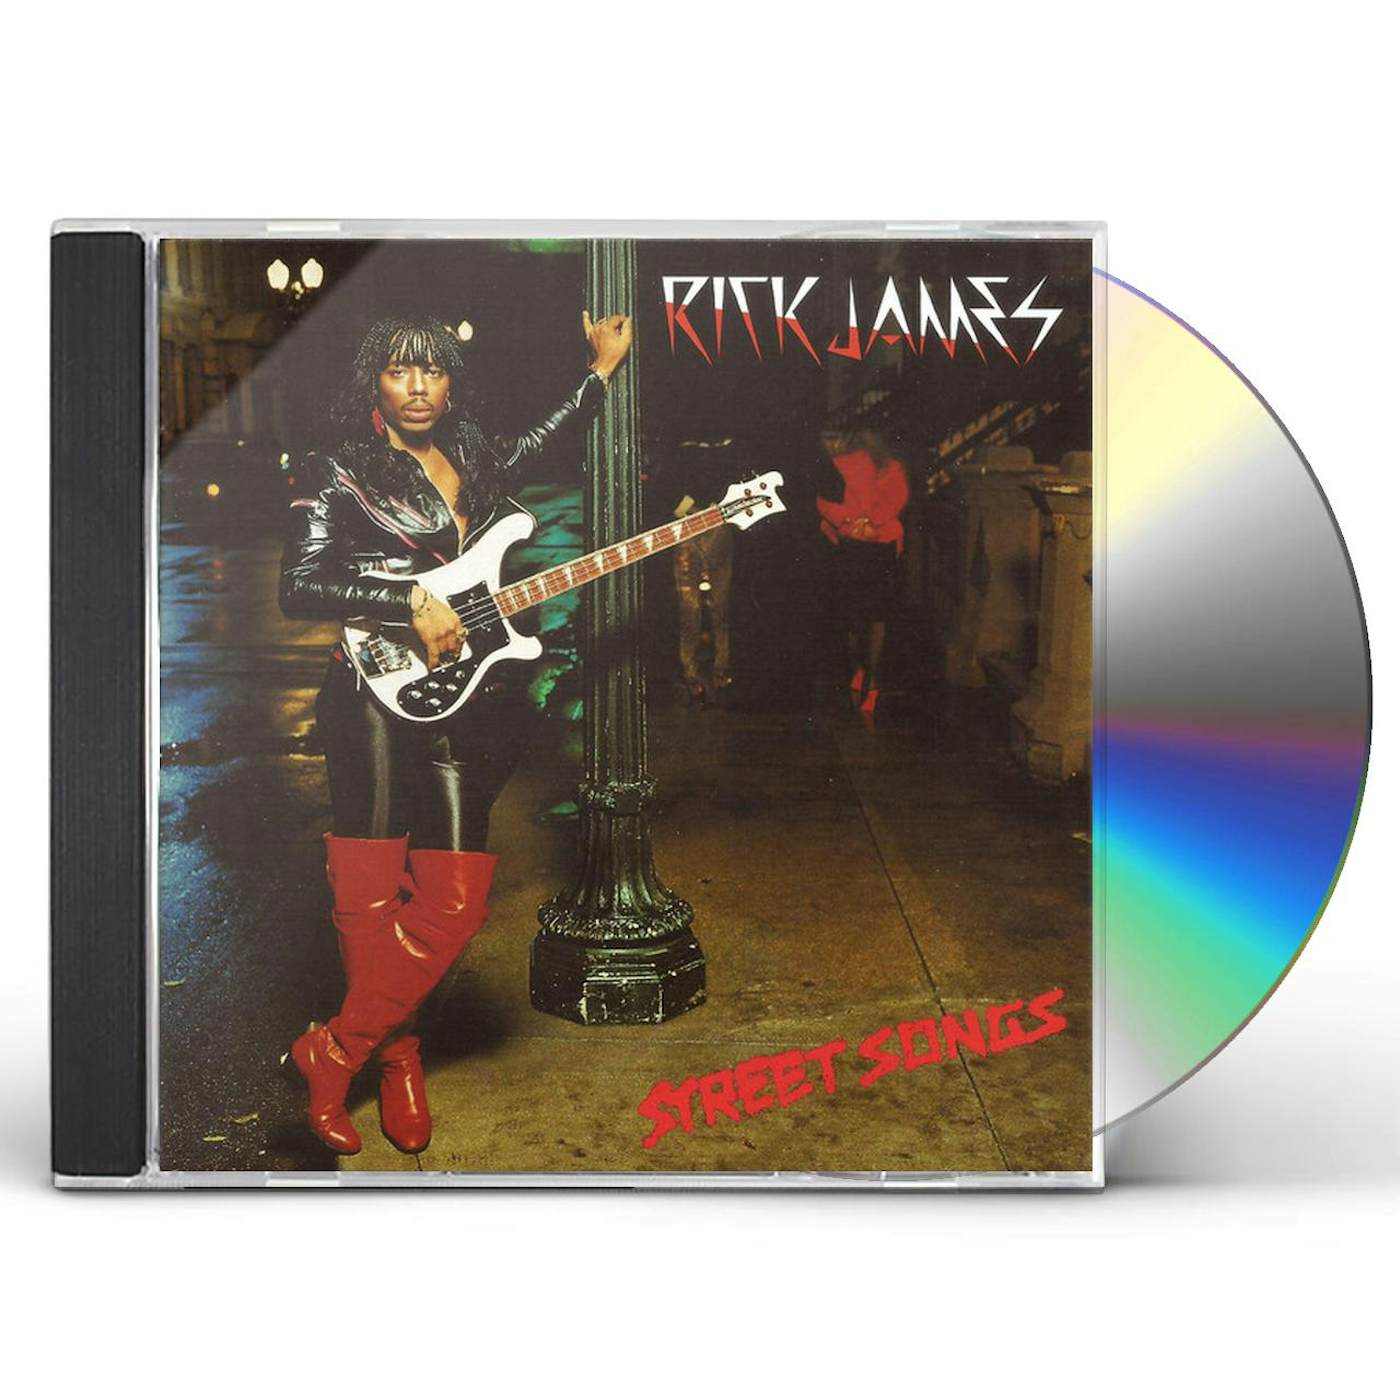 Rick James STREET SONGS CD